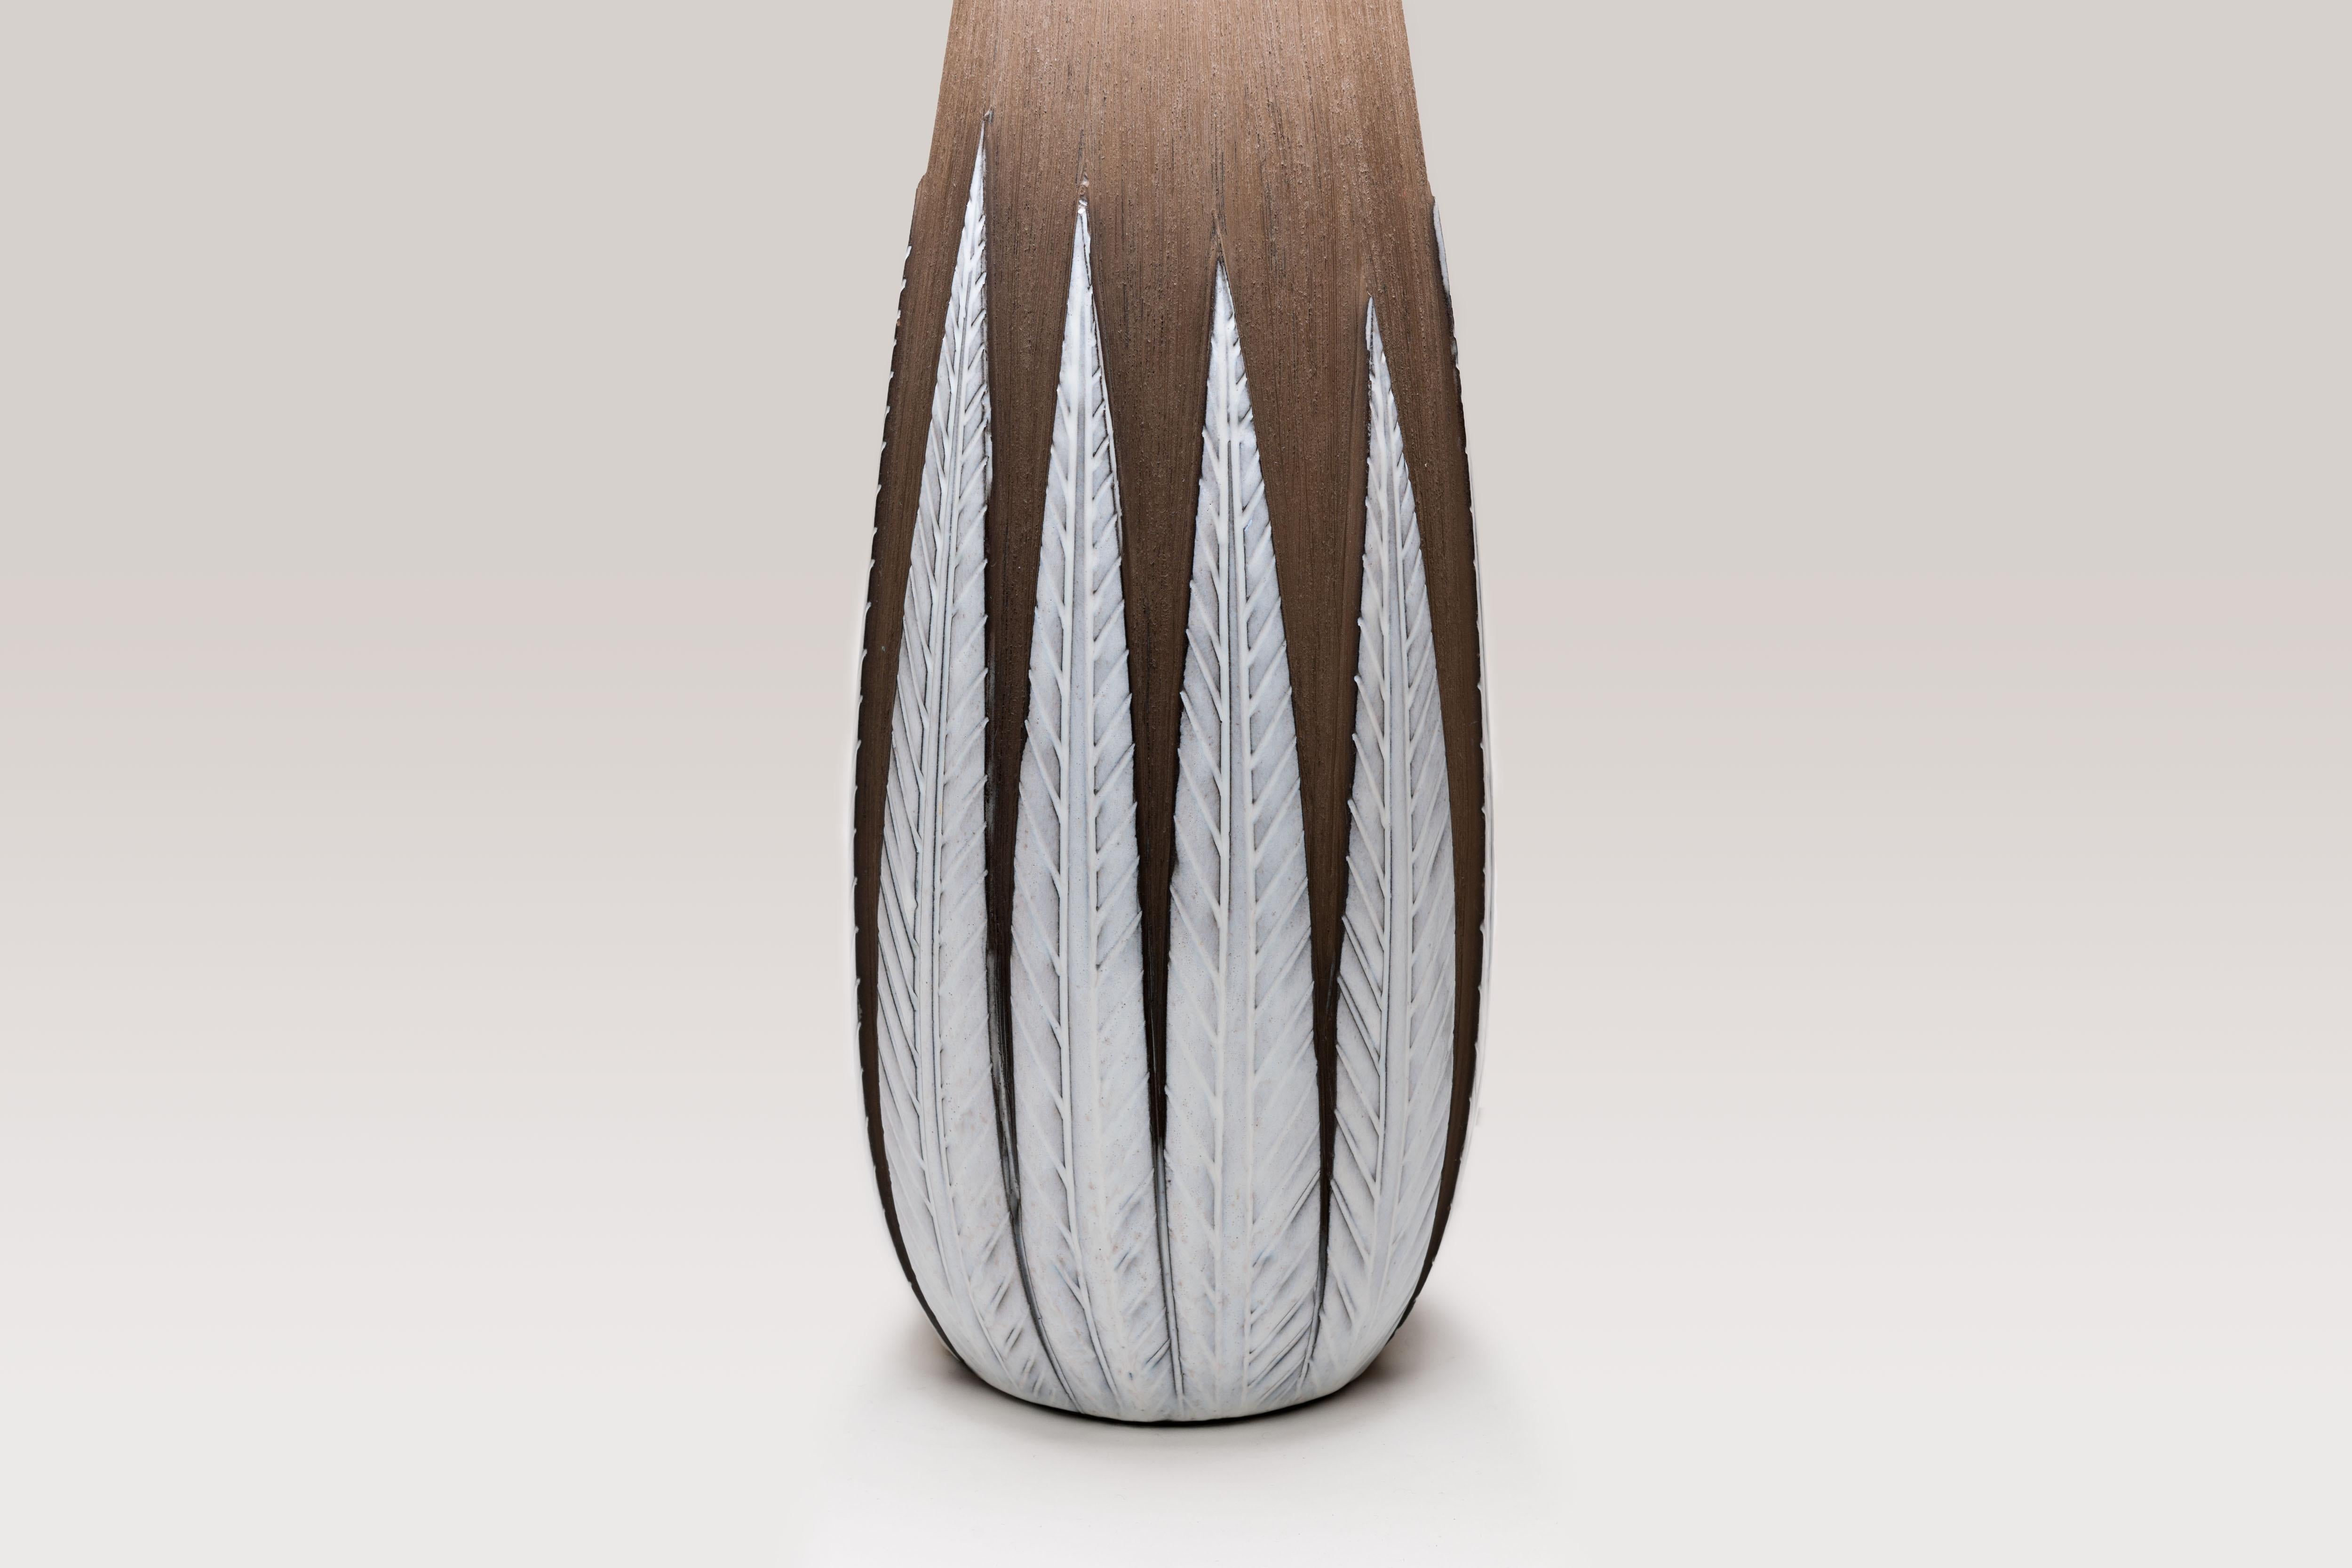 Anna-Lisa Thomson Ceramic 'Paprika' Vase Lamp by Upsala Ekeby, Swedish Modern 1